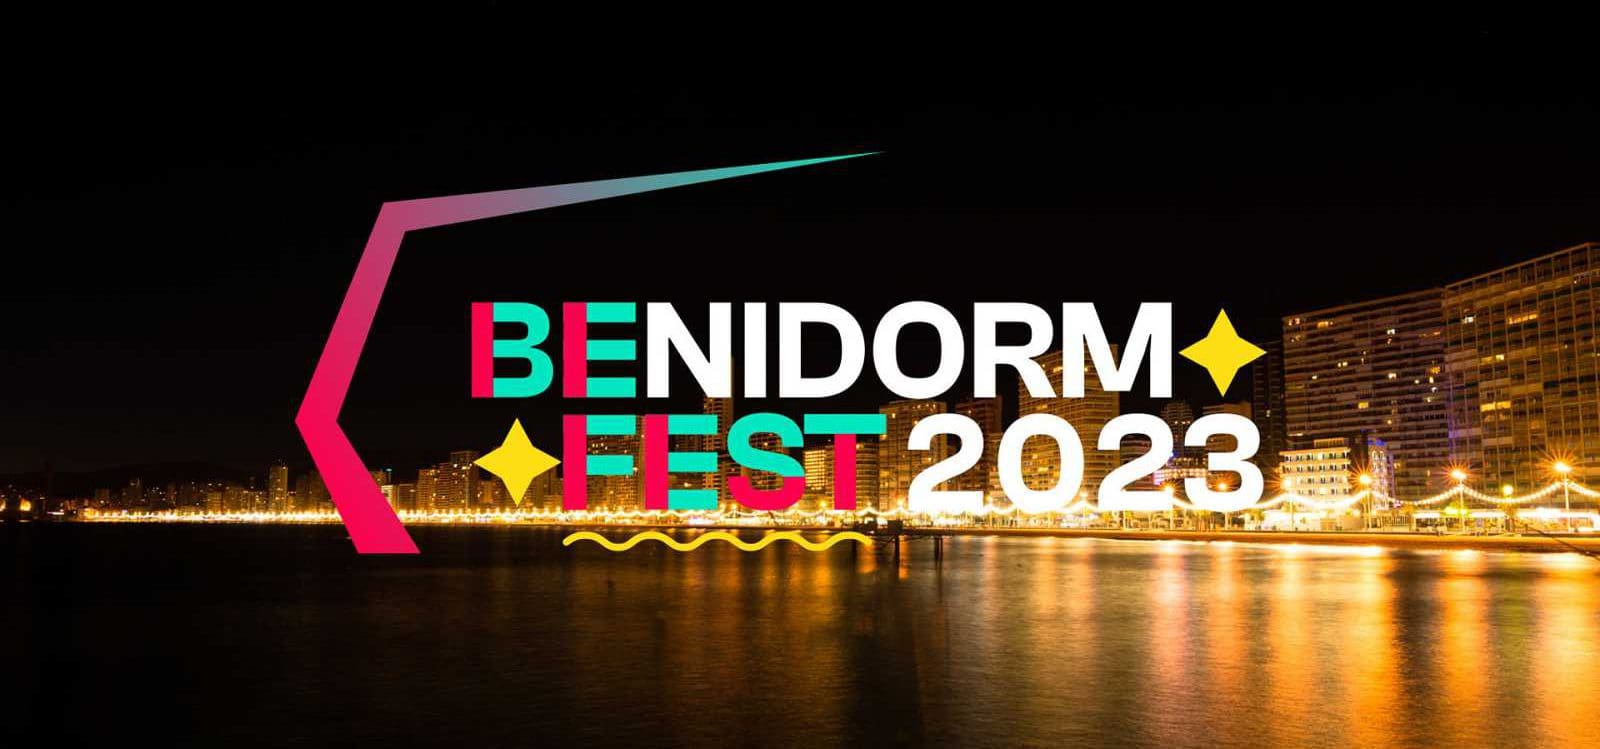 Benidorm will decide who will represent Spain at Eurovision 2023